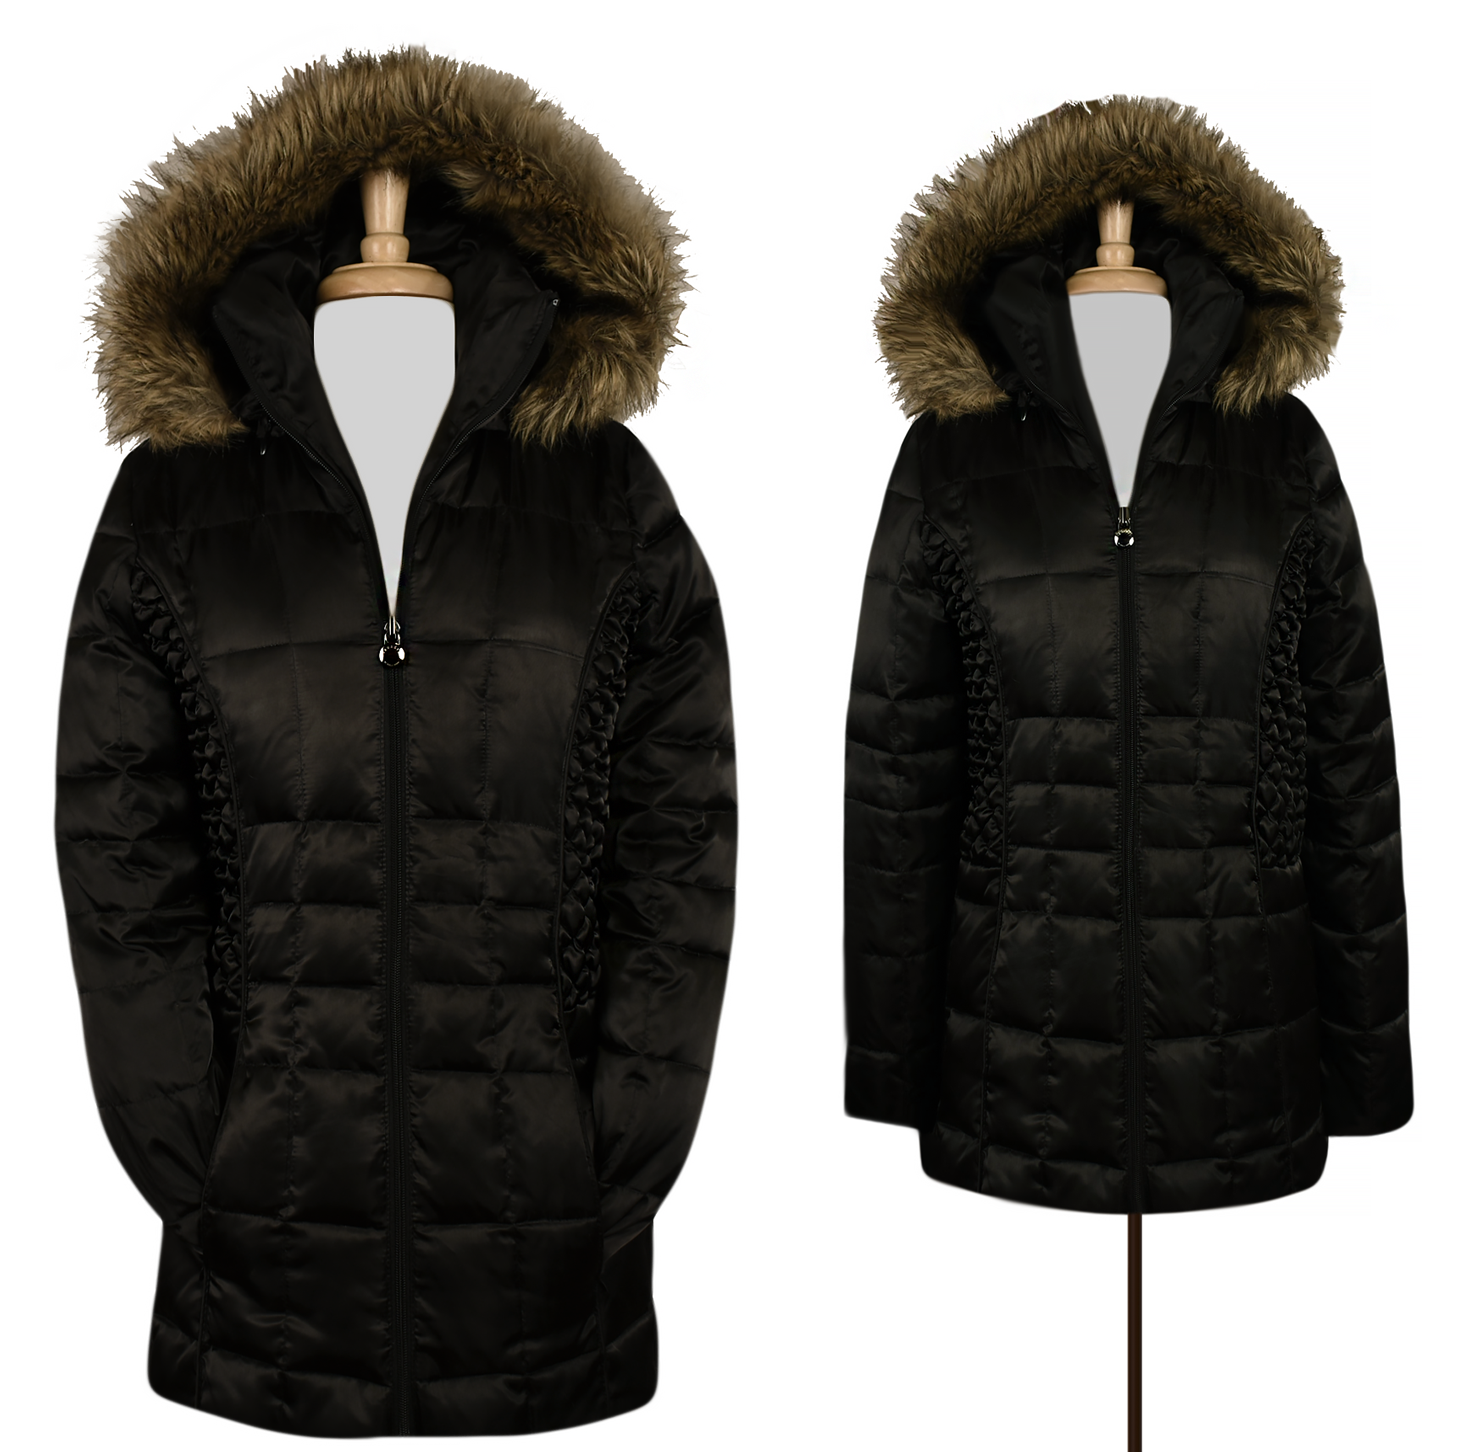 black winter coat with black fur hood